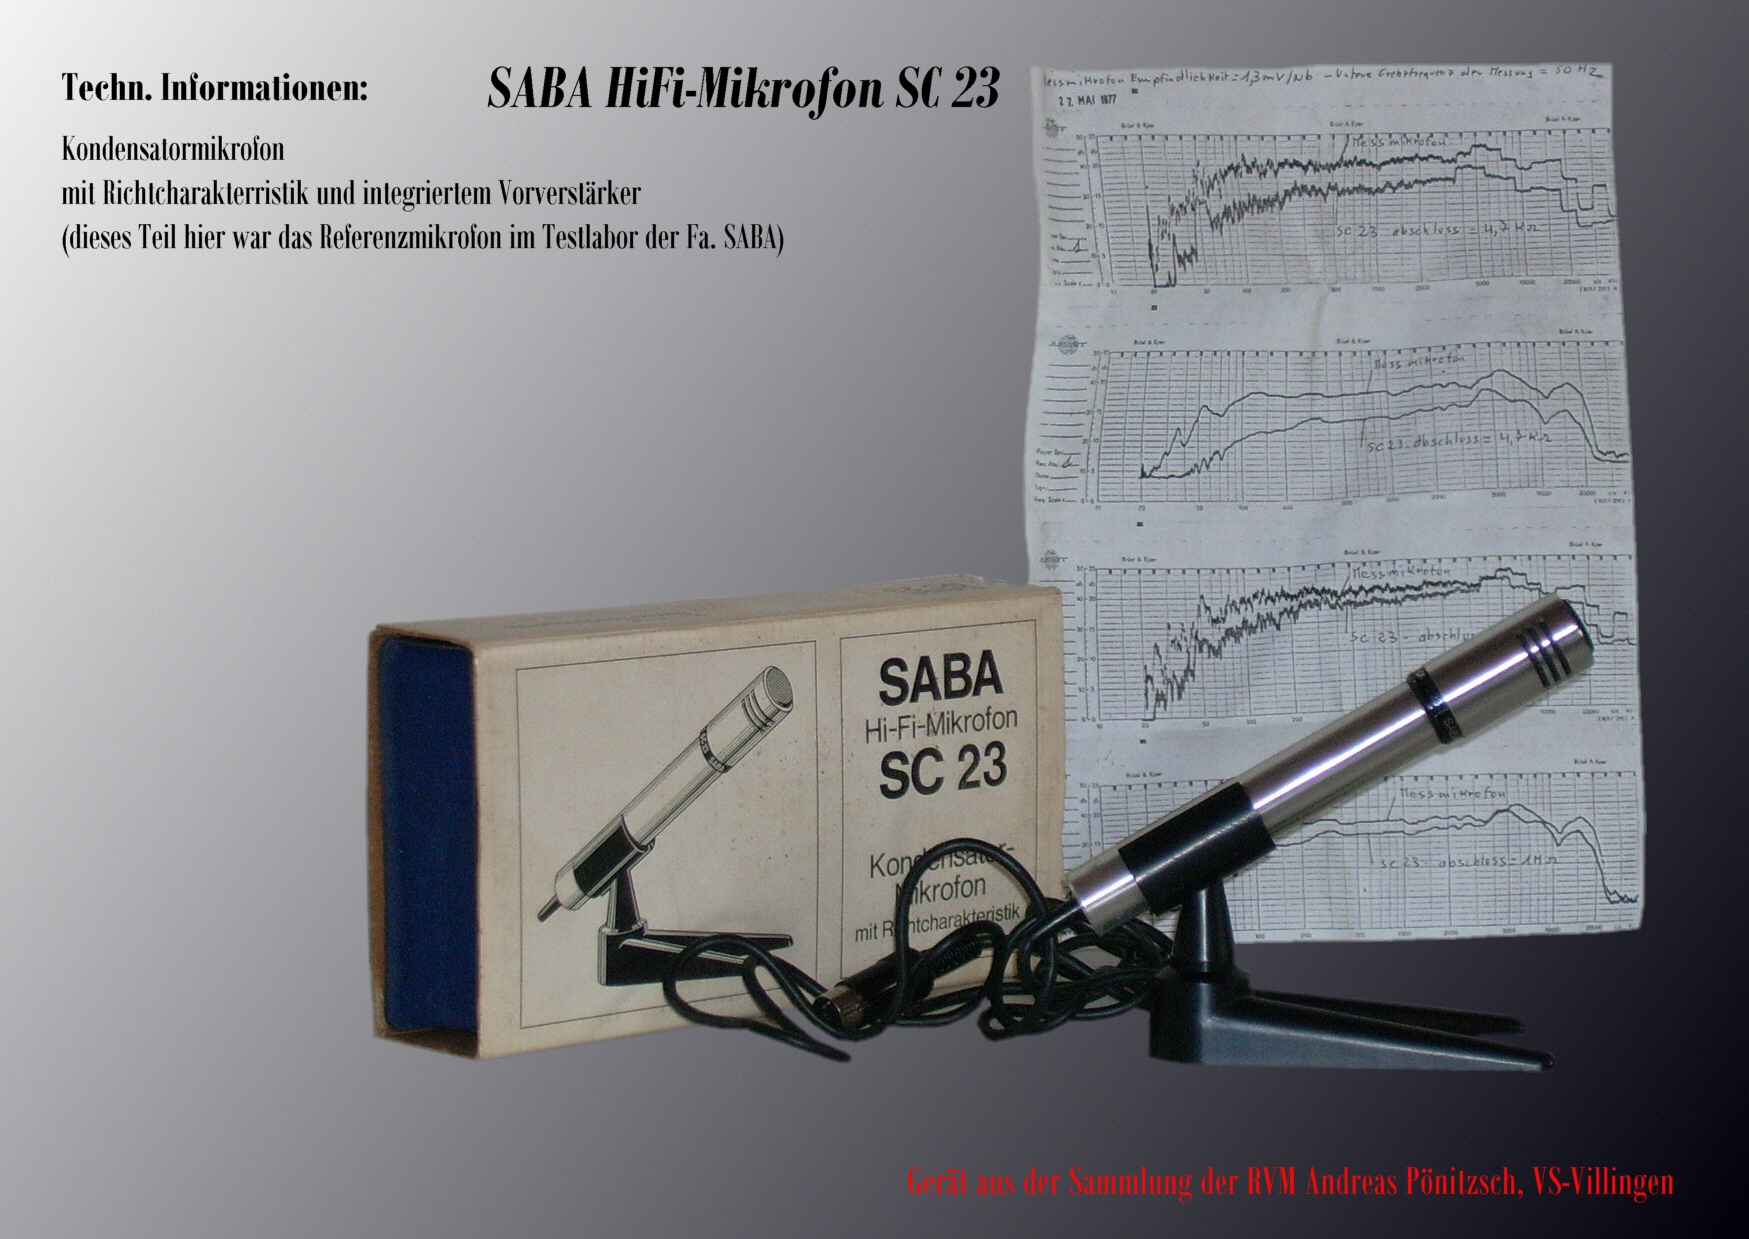 SABA HiFi-Mikrofon SC 23